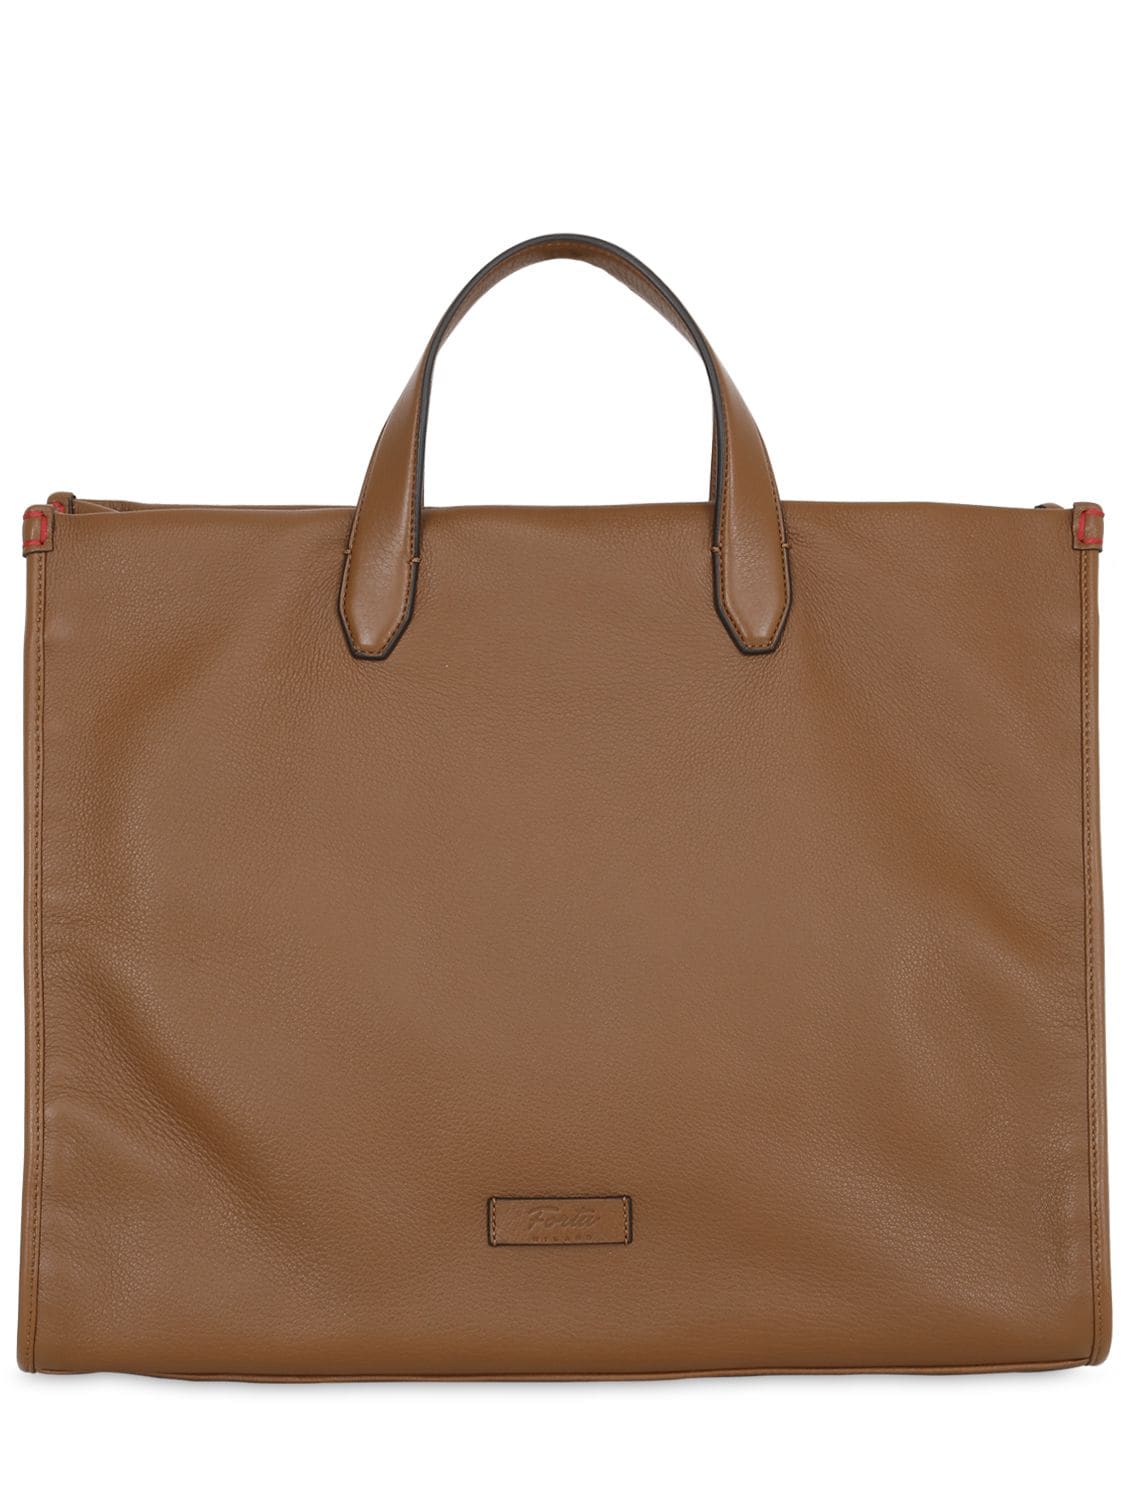 Fortu Milano Top Handle Leather Bag In Charlotte Tan